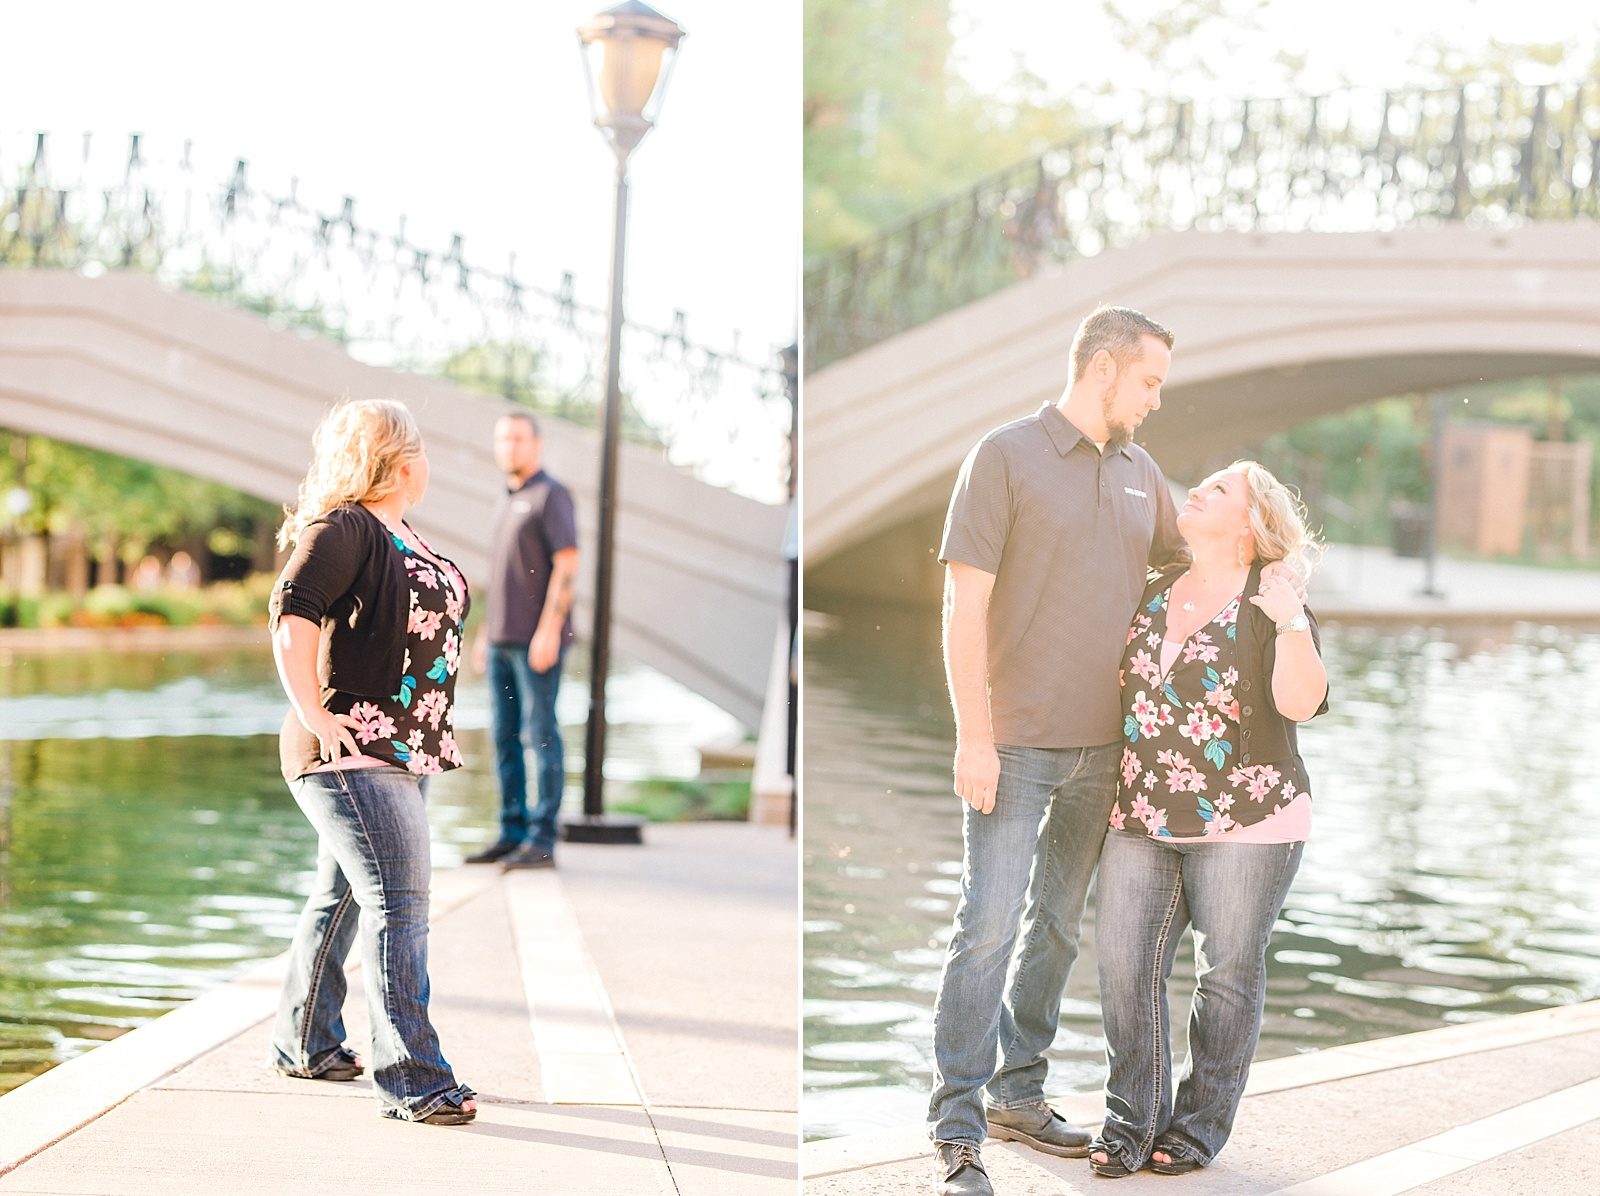 Lindsay & Ryan Engagement at White River State Park | Aubrey Lynn Photography | Indiana Wedding Photographer